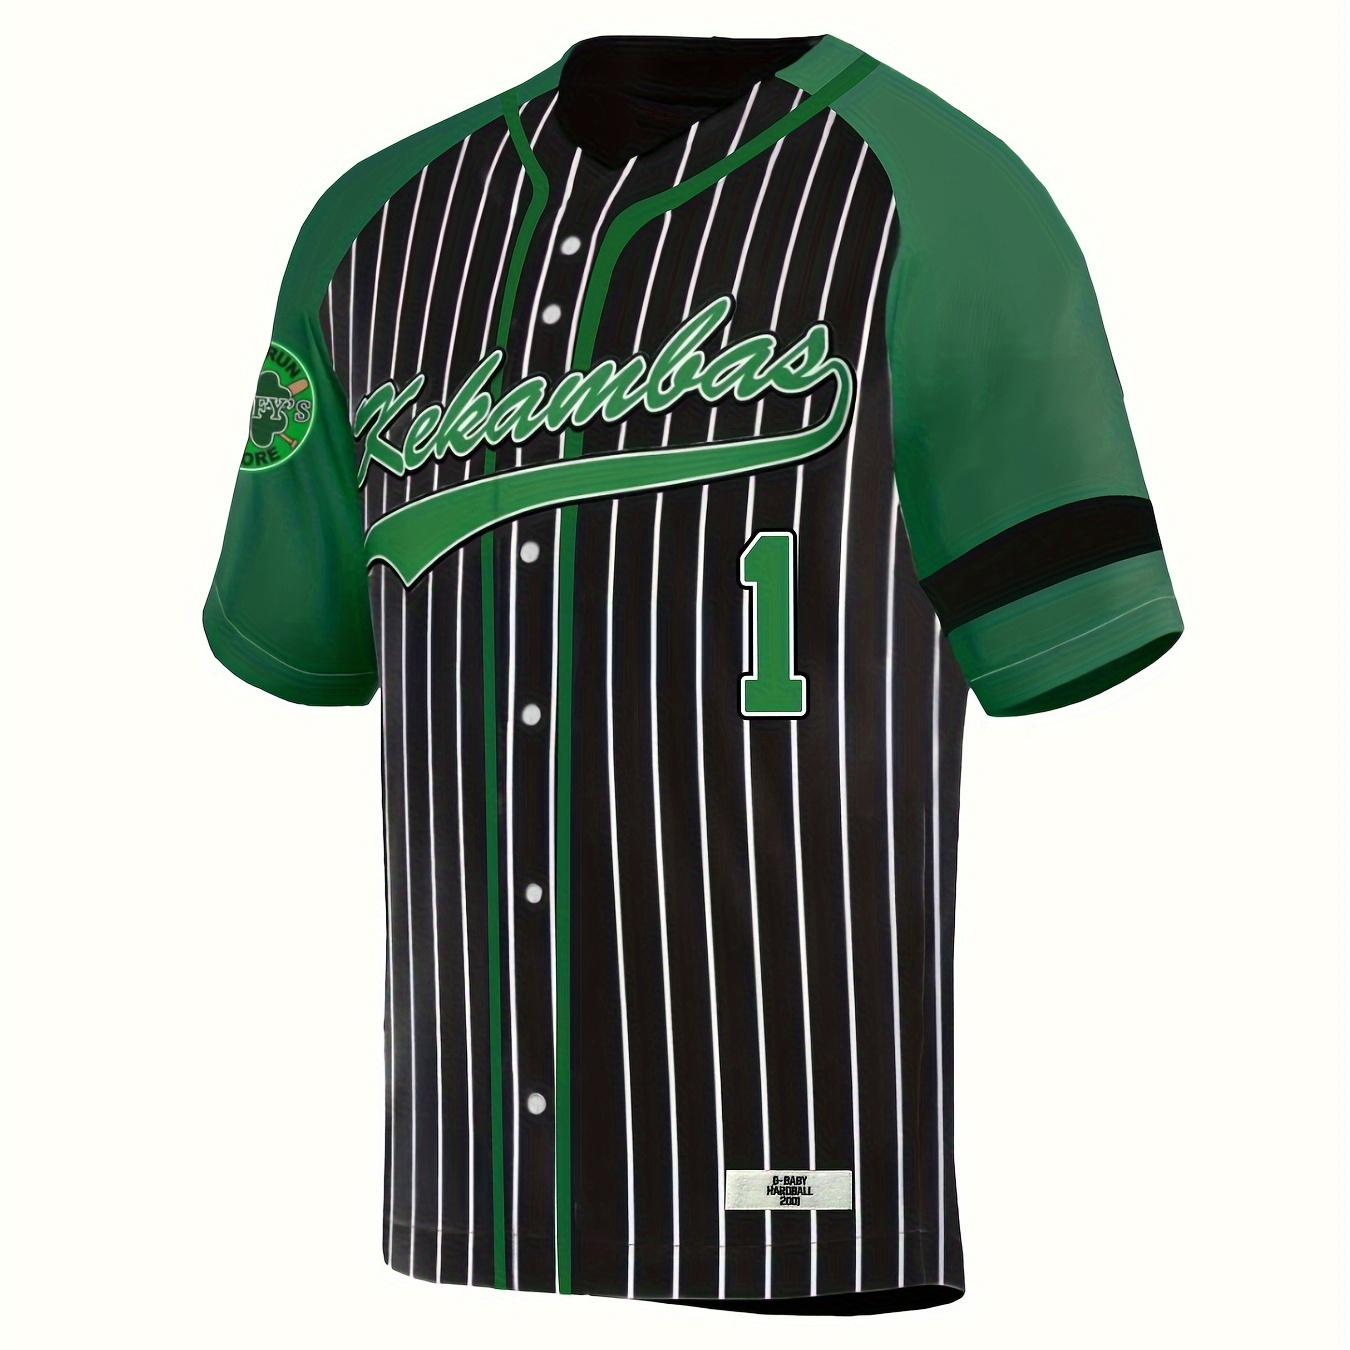 

Men's Jarius "g-baby" Evans # 1 Kekambas Baseball Shirt, Embroidered Casual Baseball Cardigan Black Xs-3xl